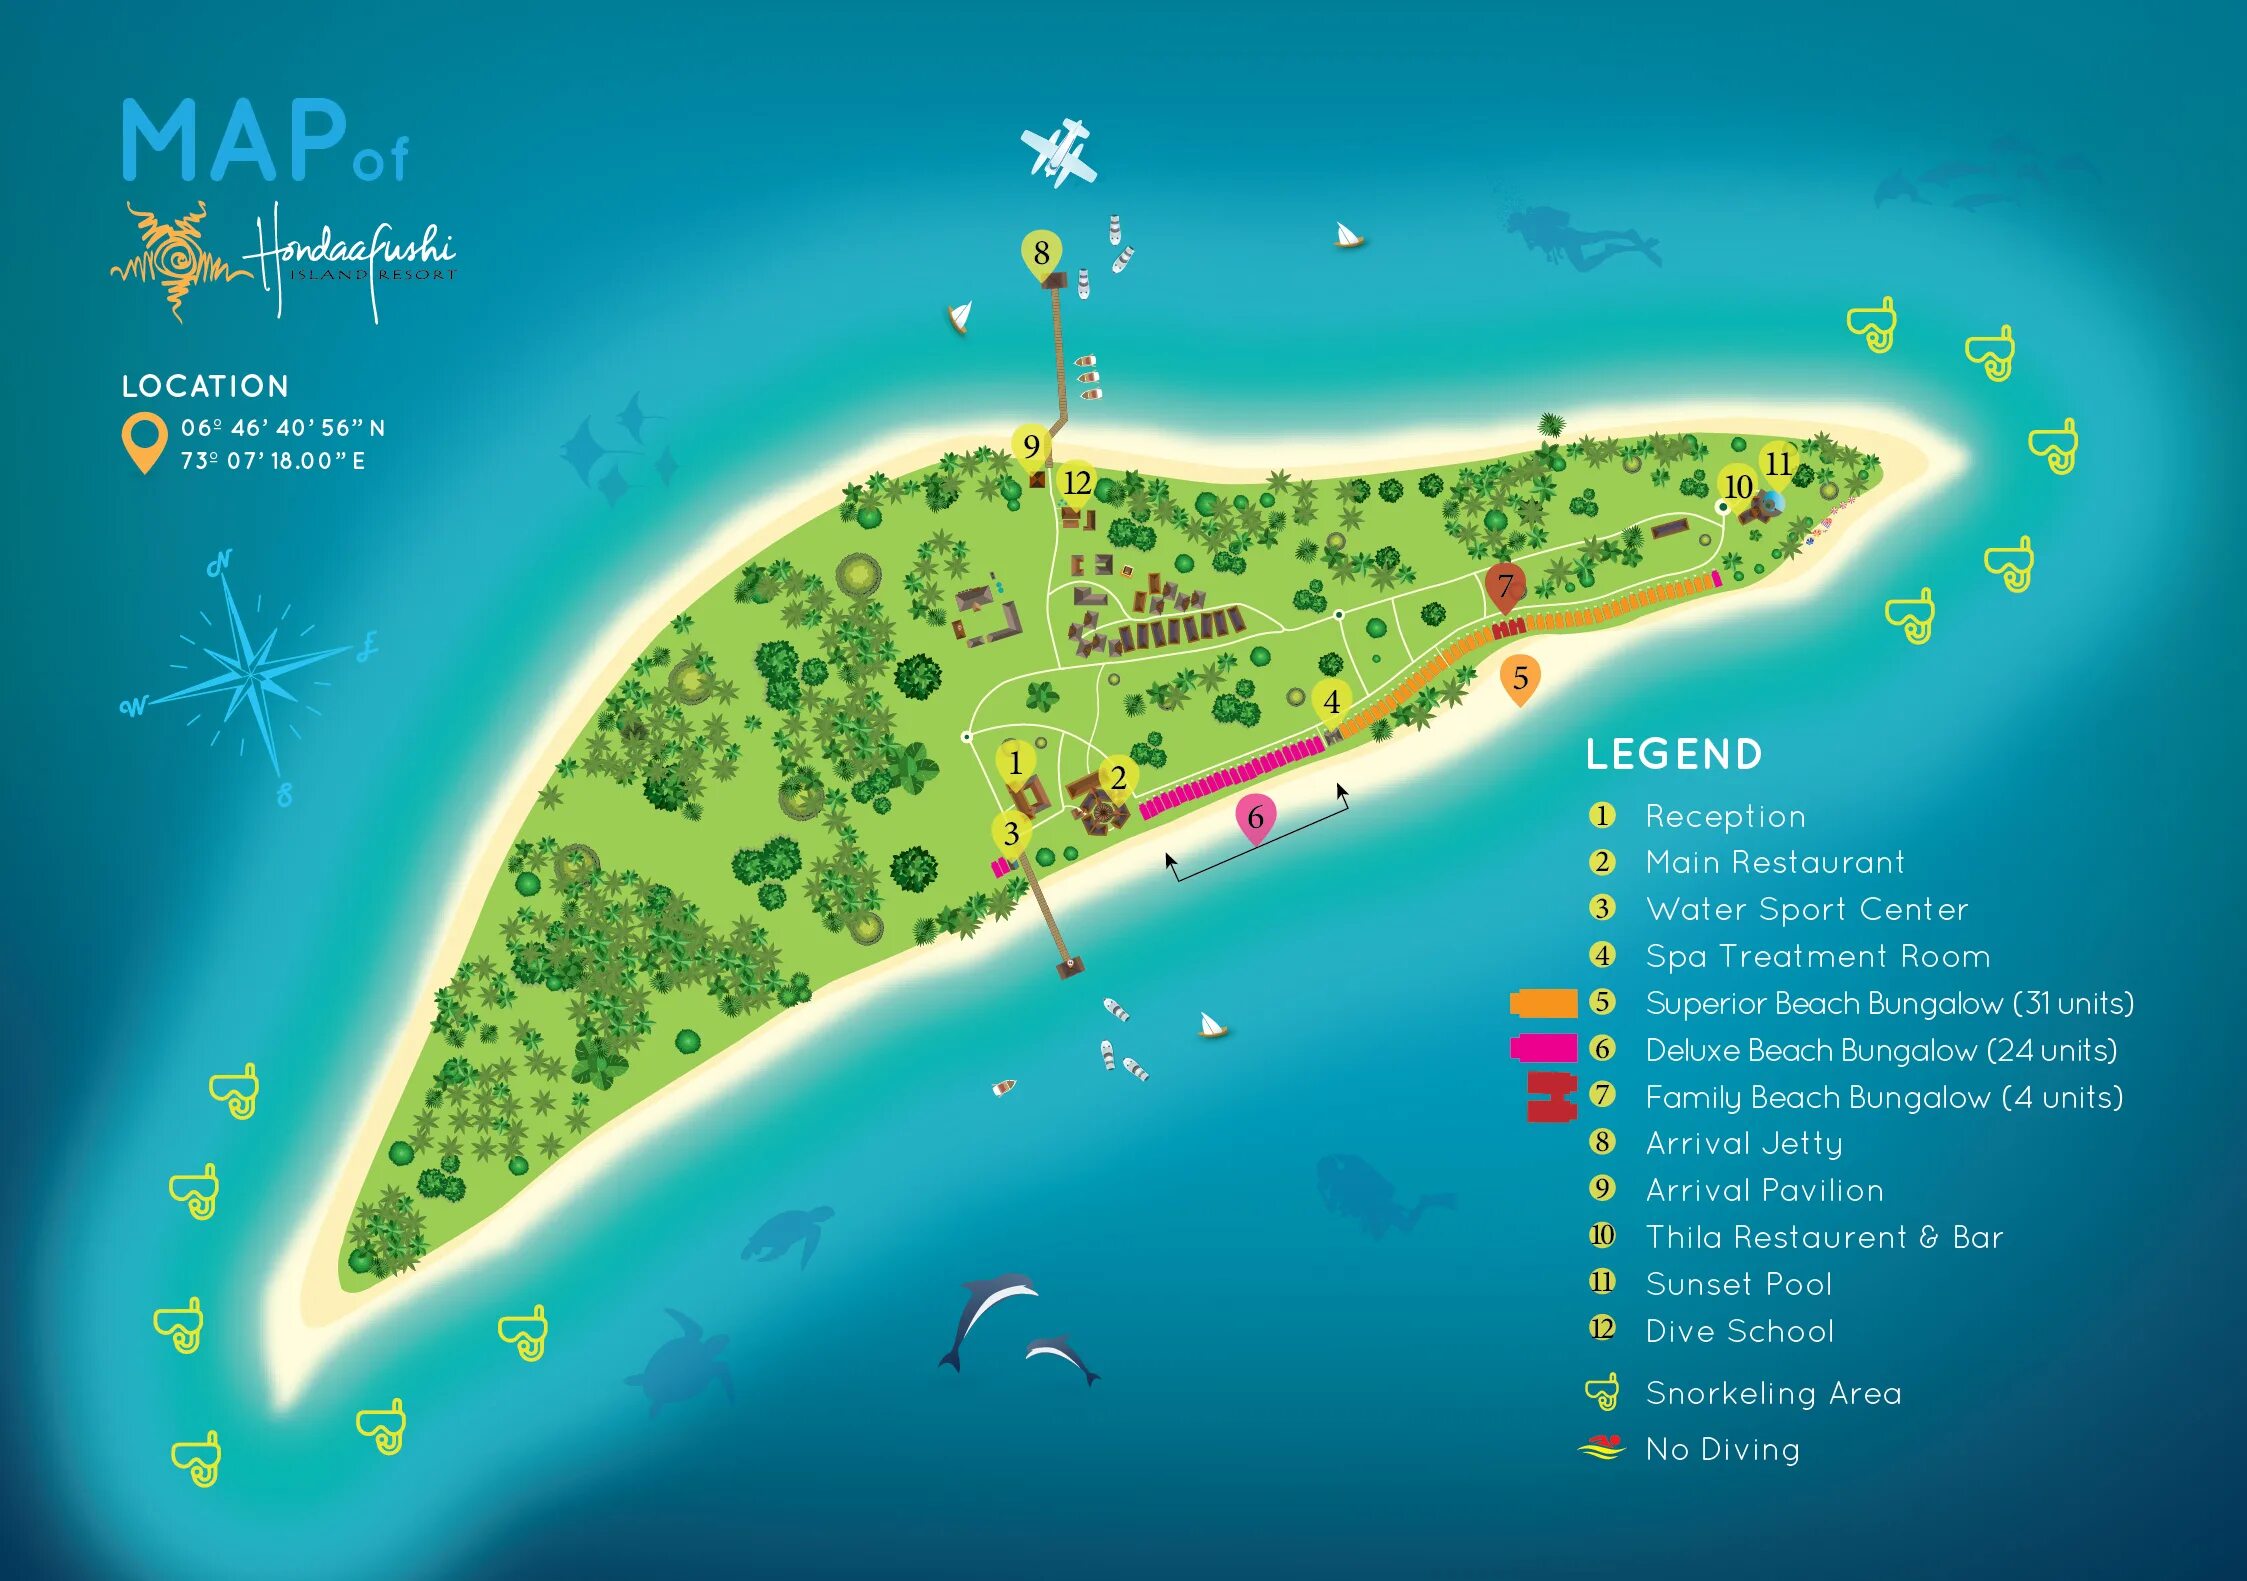 Отель Hondaafushi Island Resort. Hondaafushi Island Resort 4 карта отеля. Meeru Island Resort карта отеля. Meeru Island Resort 4 карта острова. Hondaafushi island 4